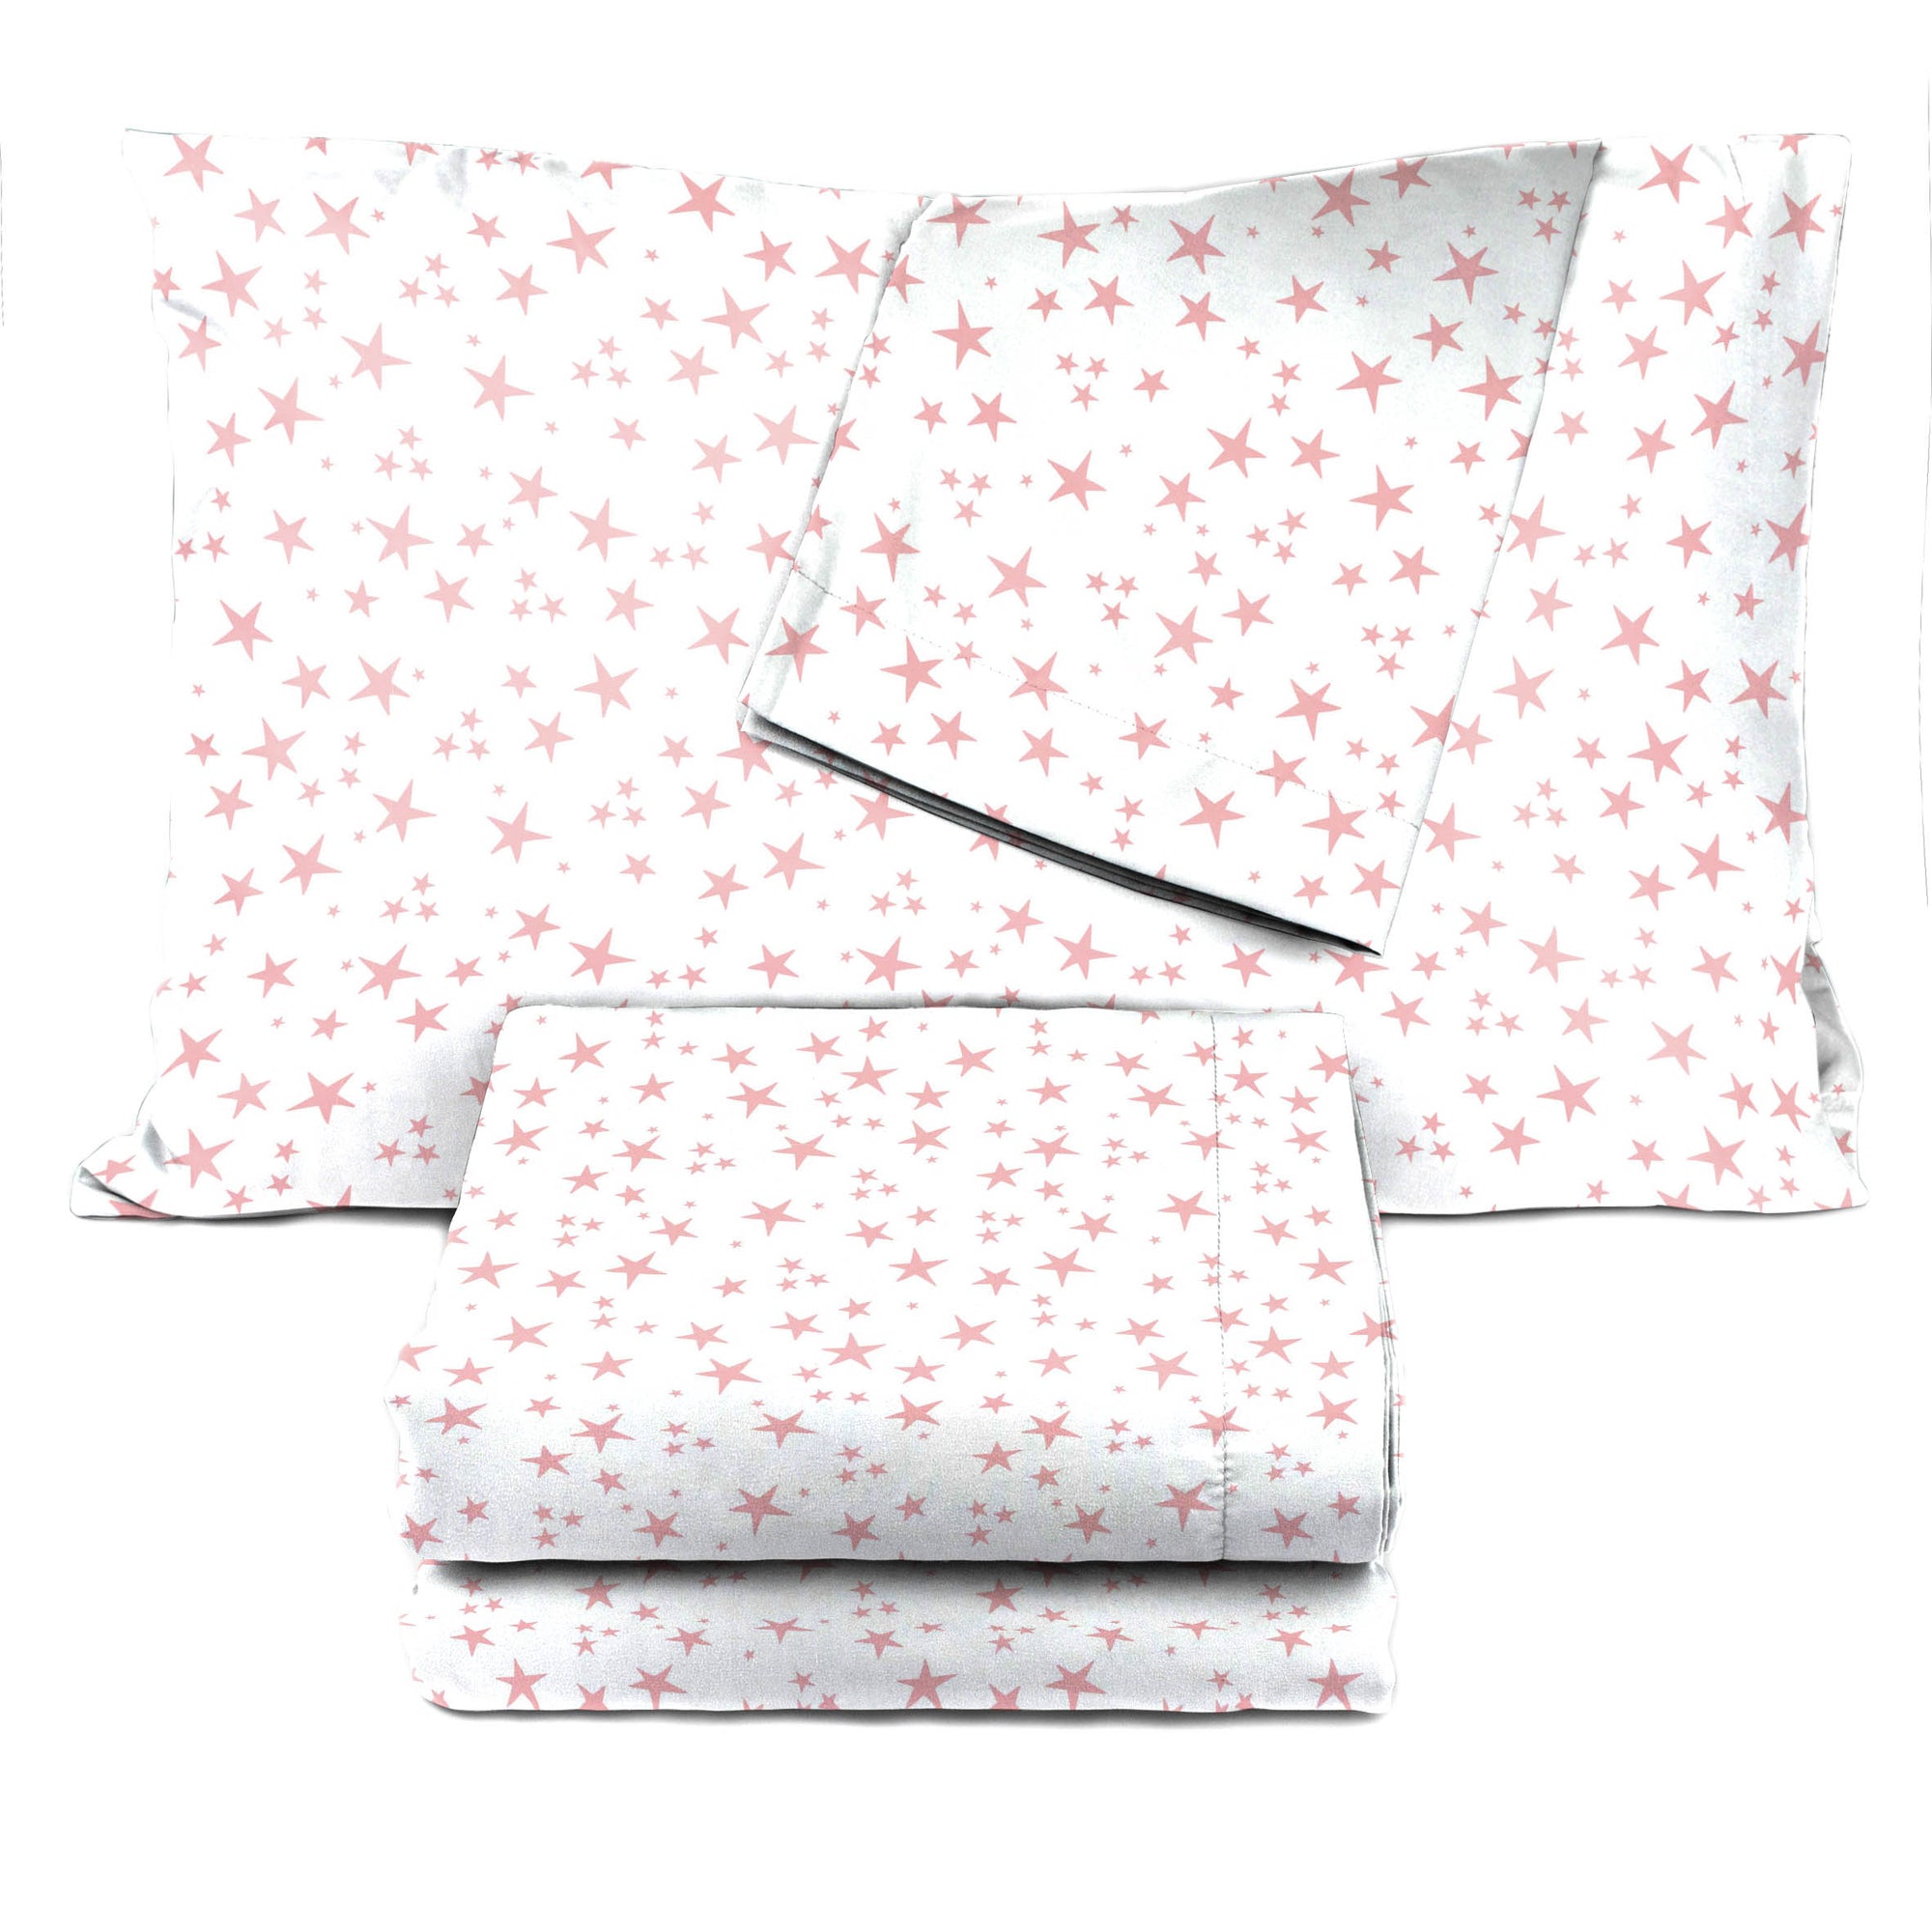 Saturday Park Pink Stars 100% Organic Cotton Sheet Set